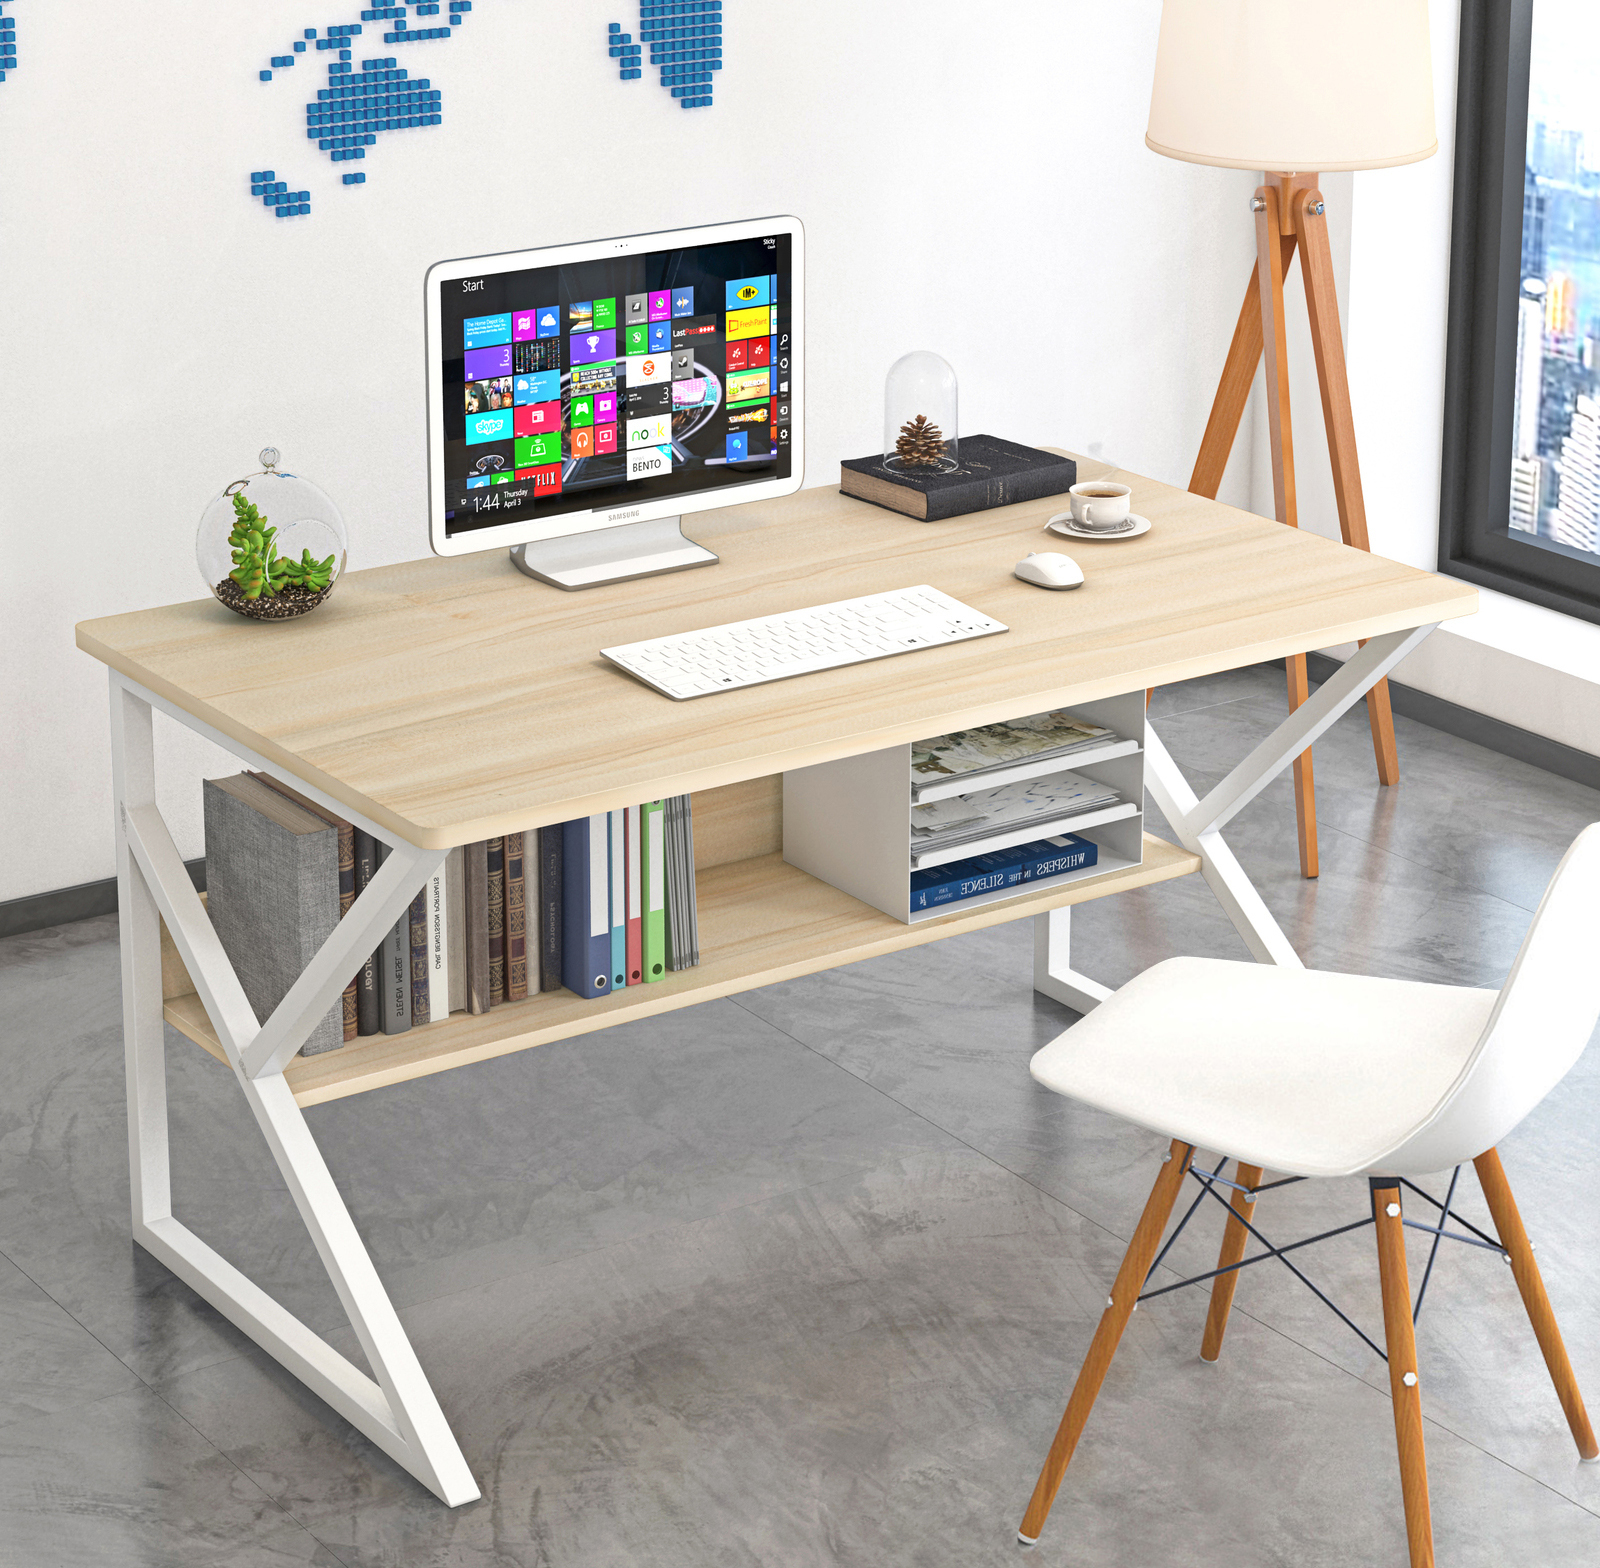 Kori Wood & Metal Computer Desk with Shelf (White) -100cm 